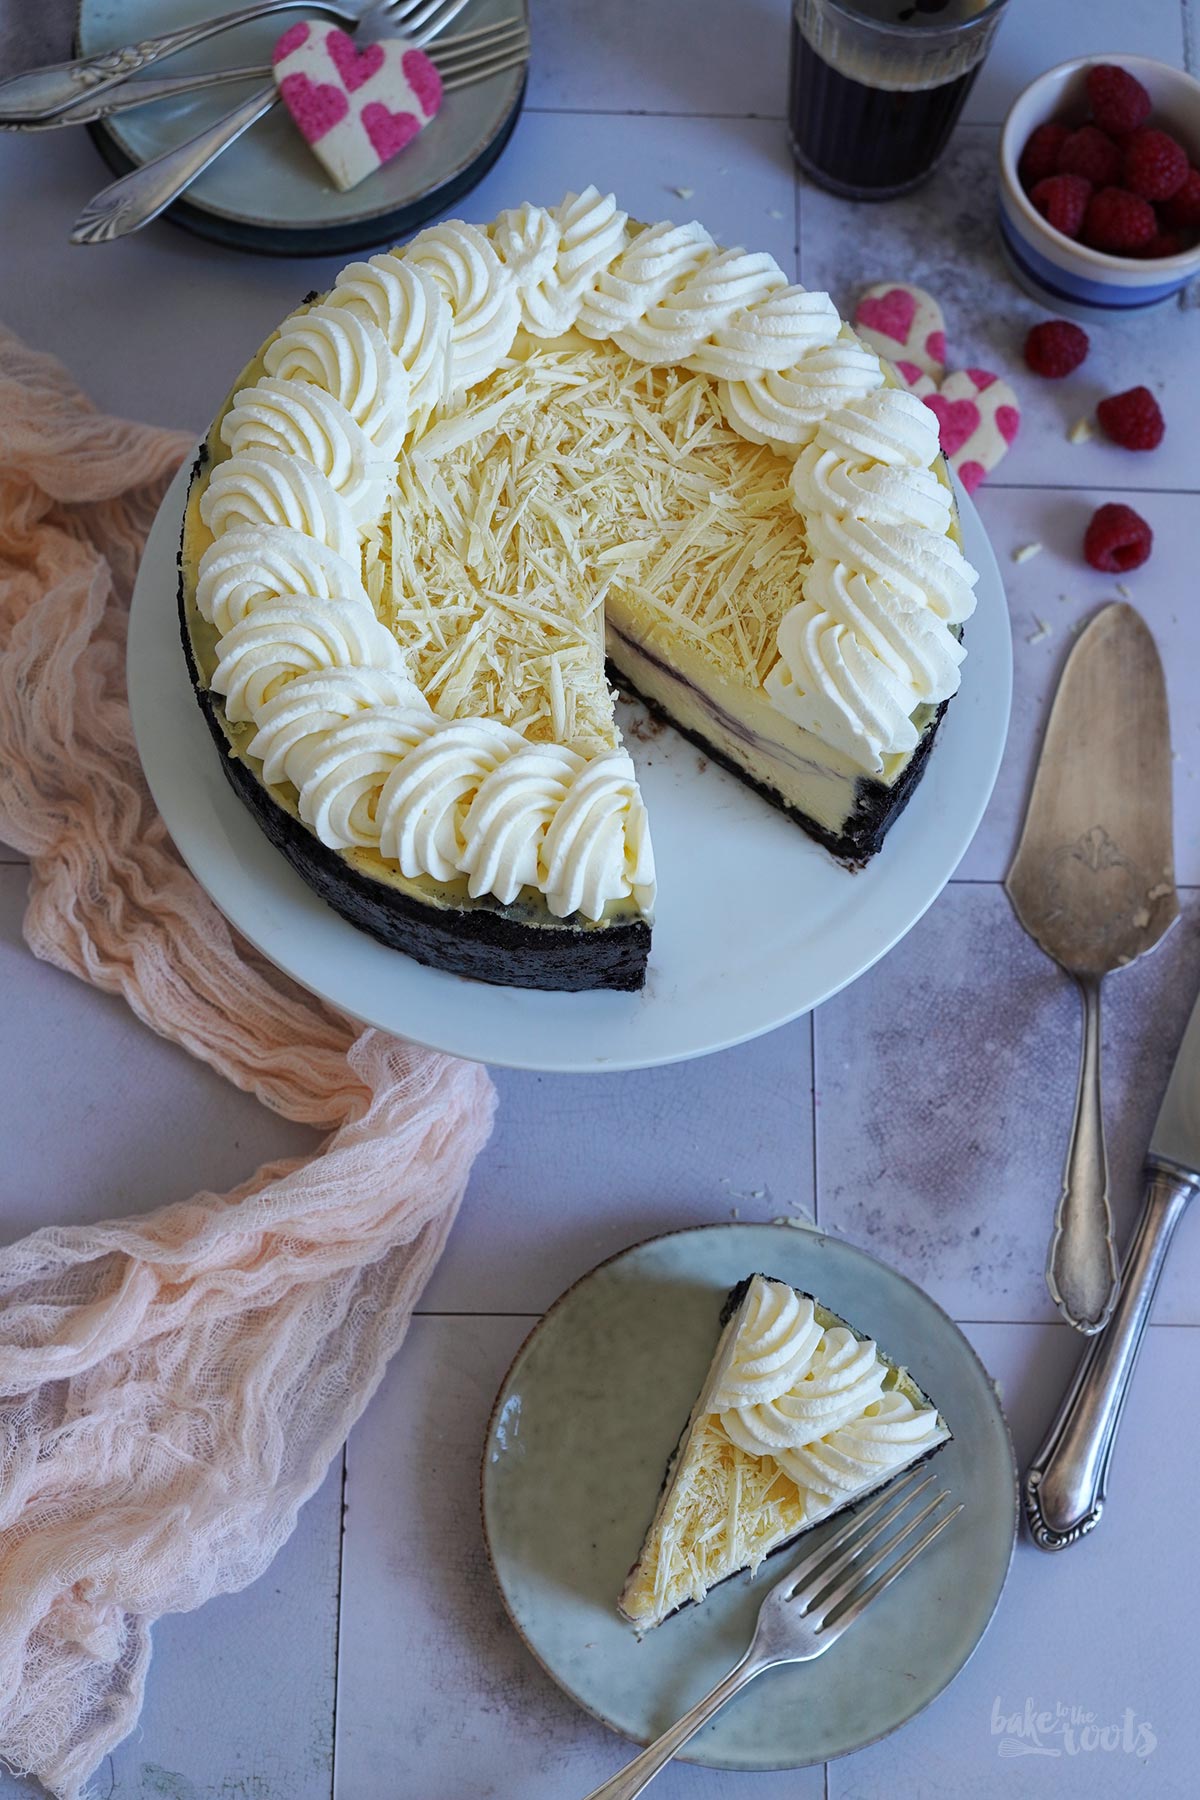 White Chocolate Raspberry Cheesecake | Bake to the roots